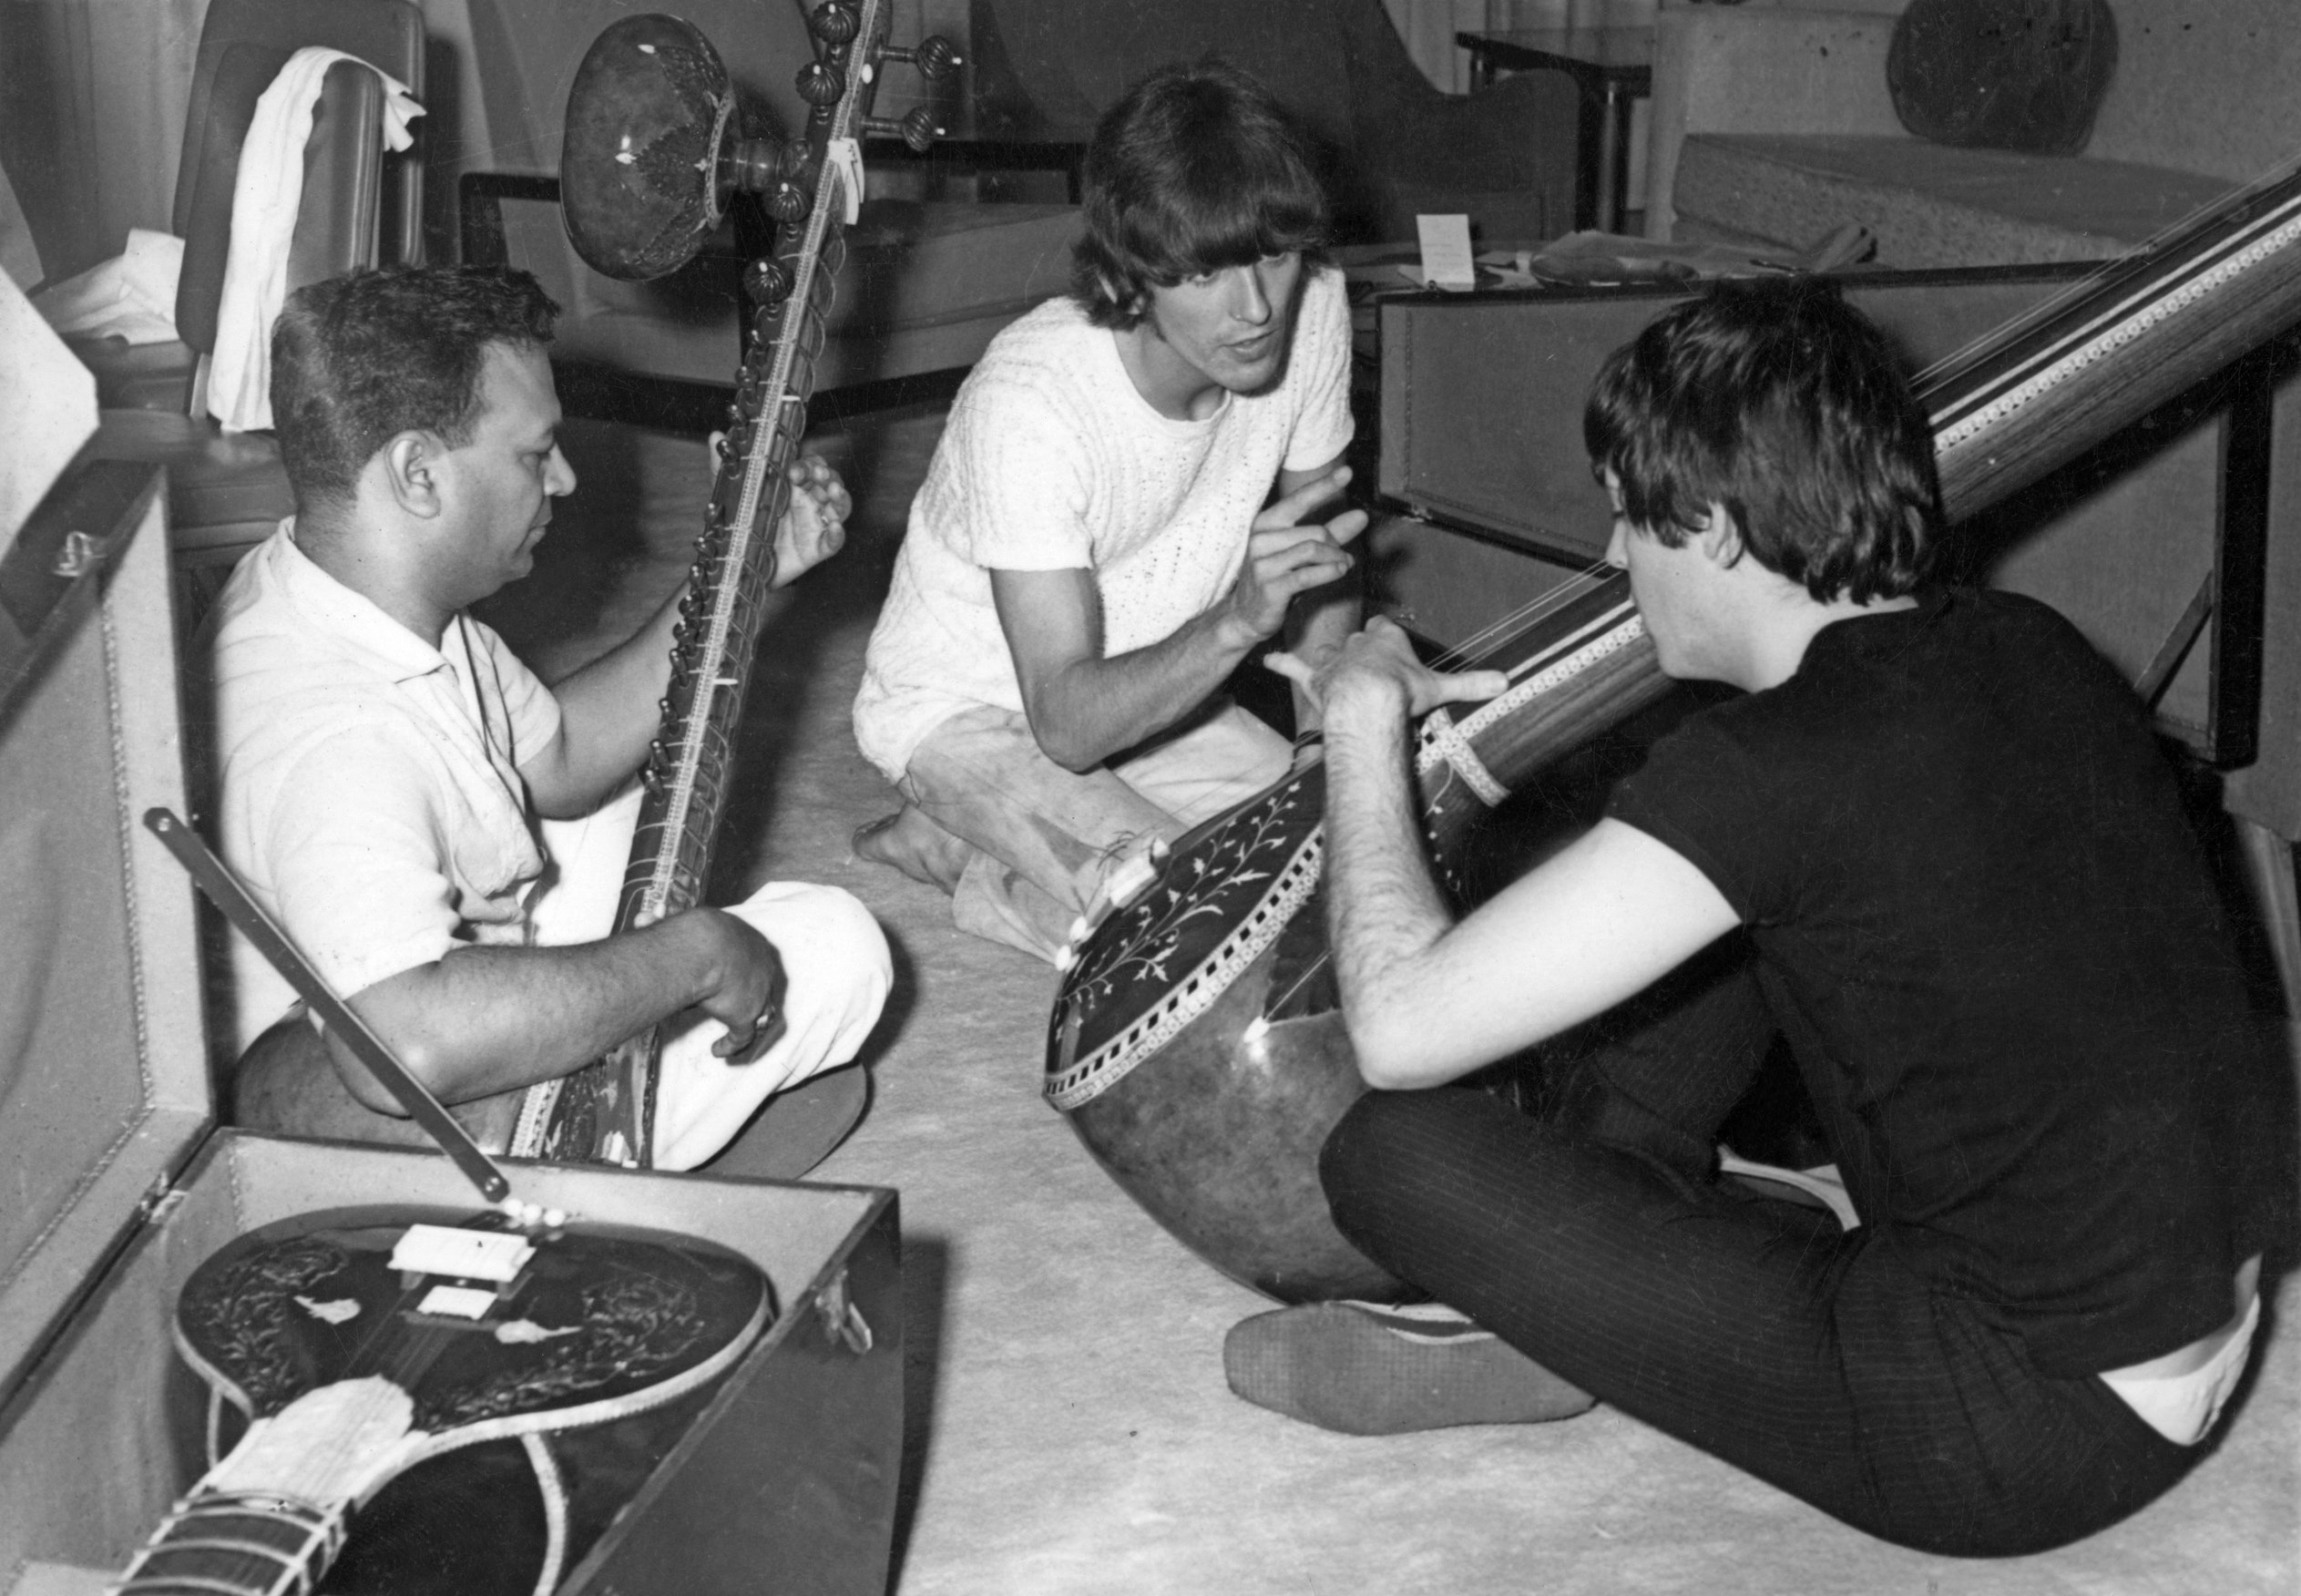 Paul McCartney Didn’t Play on Beatles Songs Where George Harrison Used a Sitar